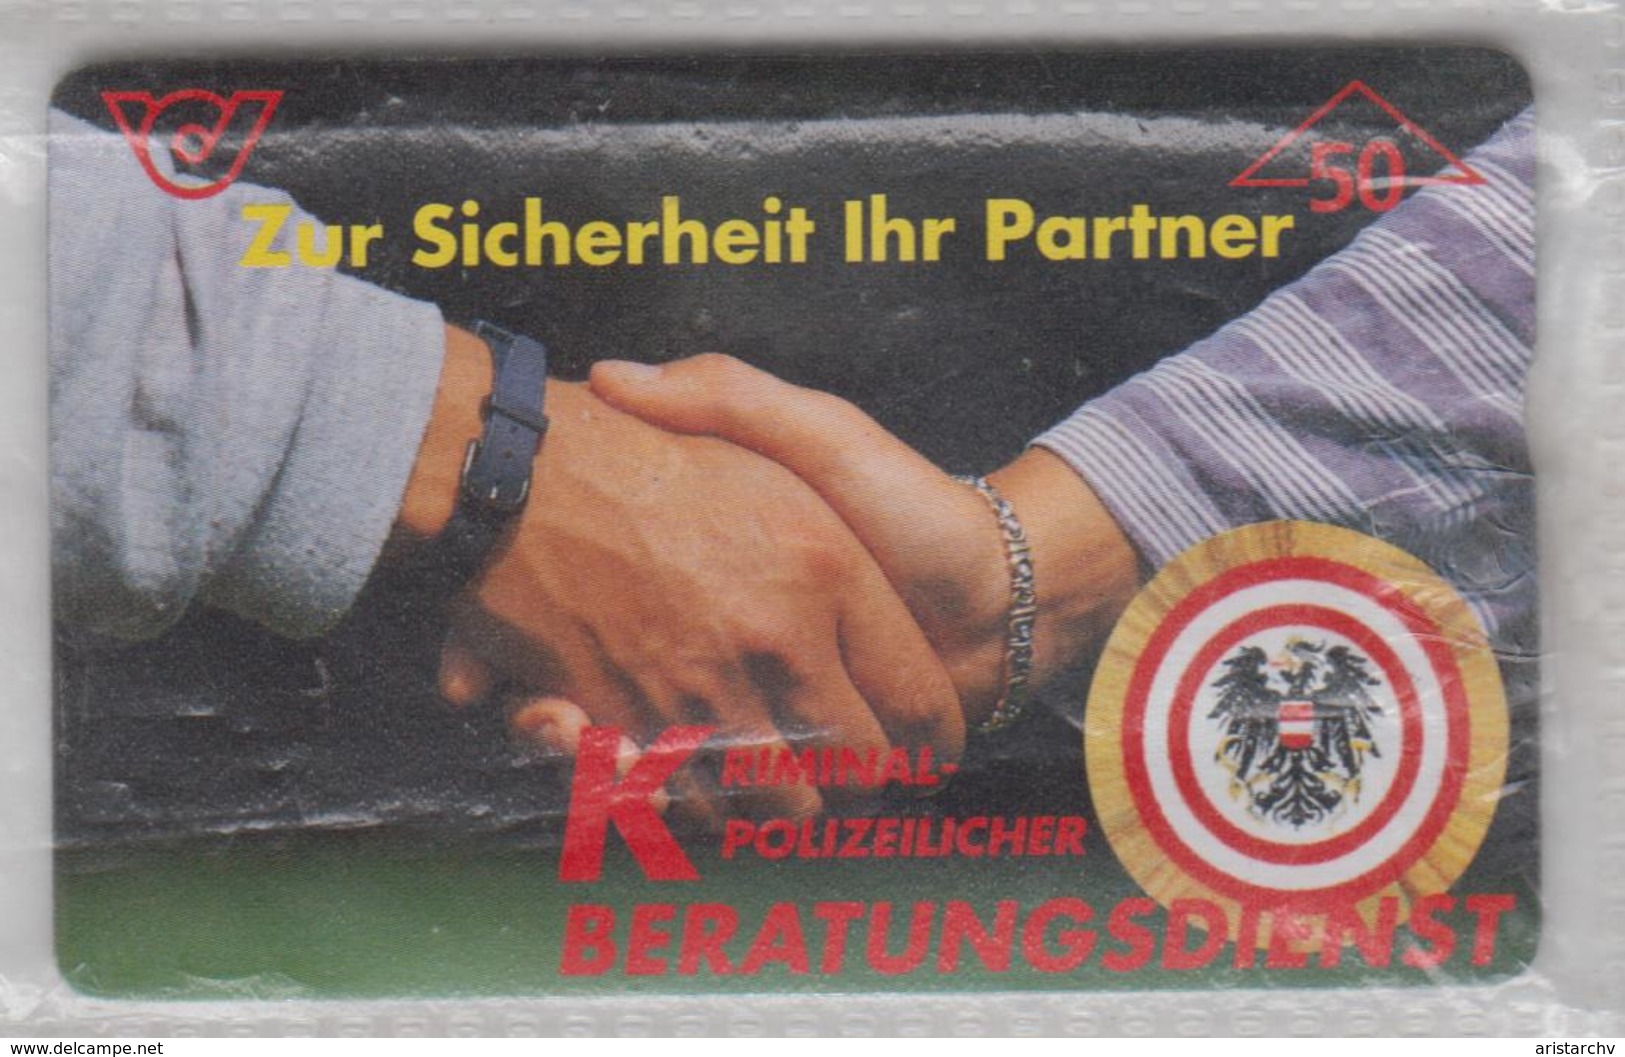 AUSTRIA 1996 KRIMINALPOLIZEILICHER BERATUNGSDIENST CRIMINAL POLICE USED PHONE CARD - Policia